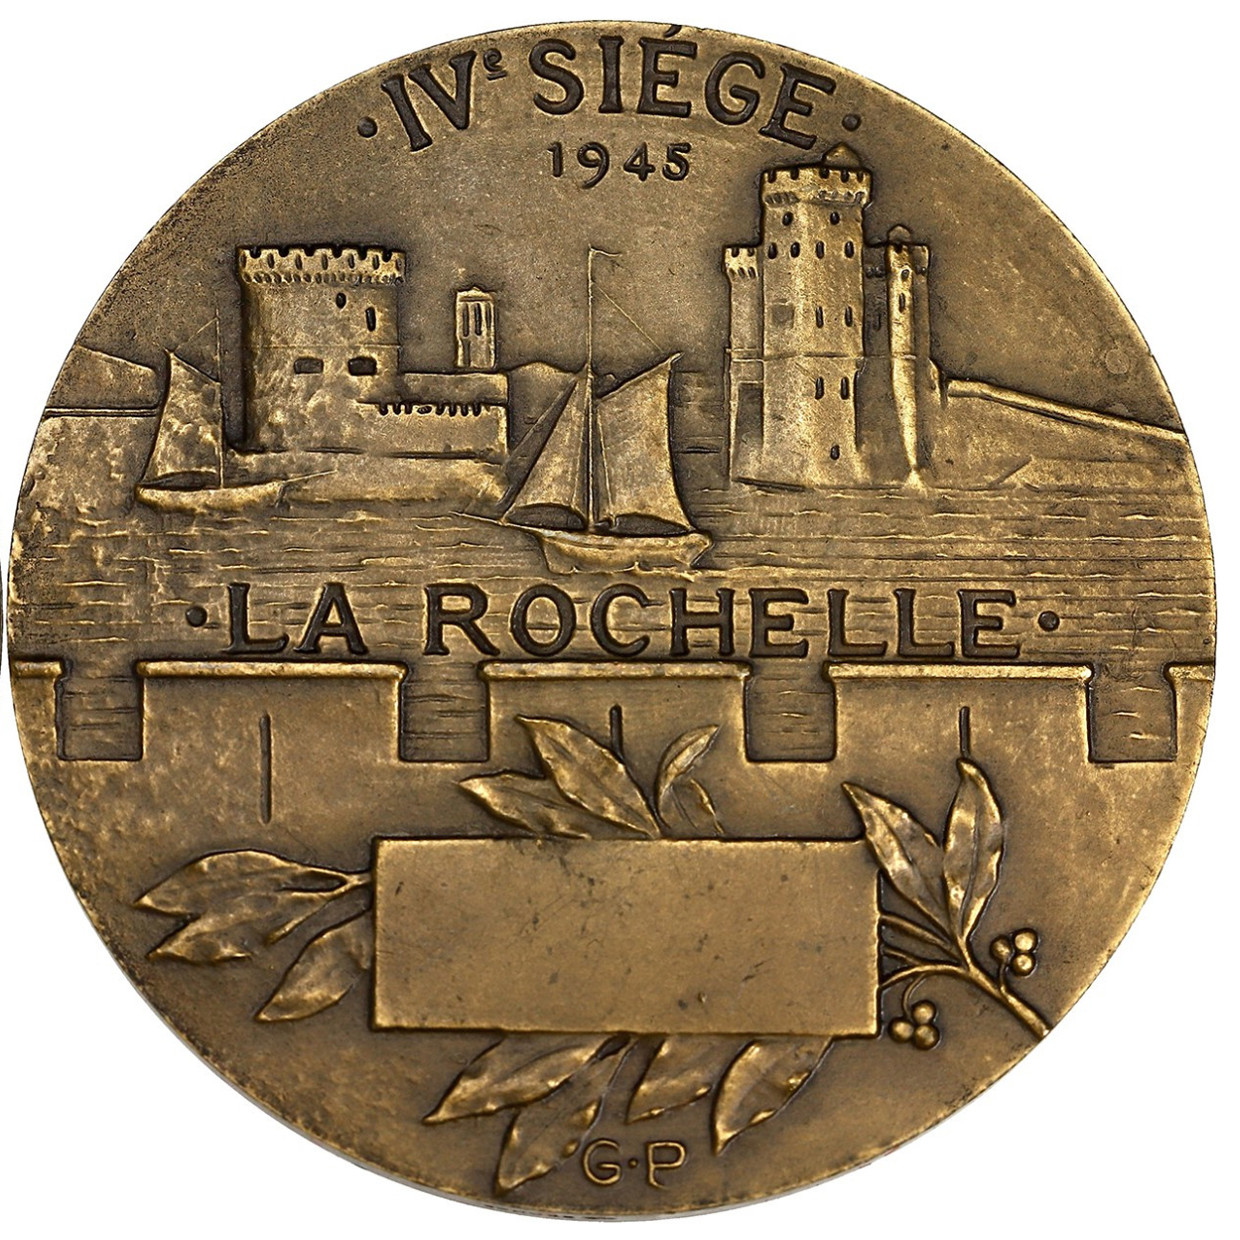 La Rochelle - IVème siège - 1945 revers